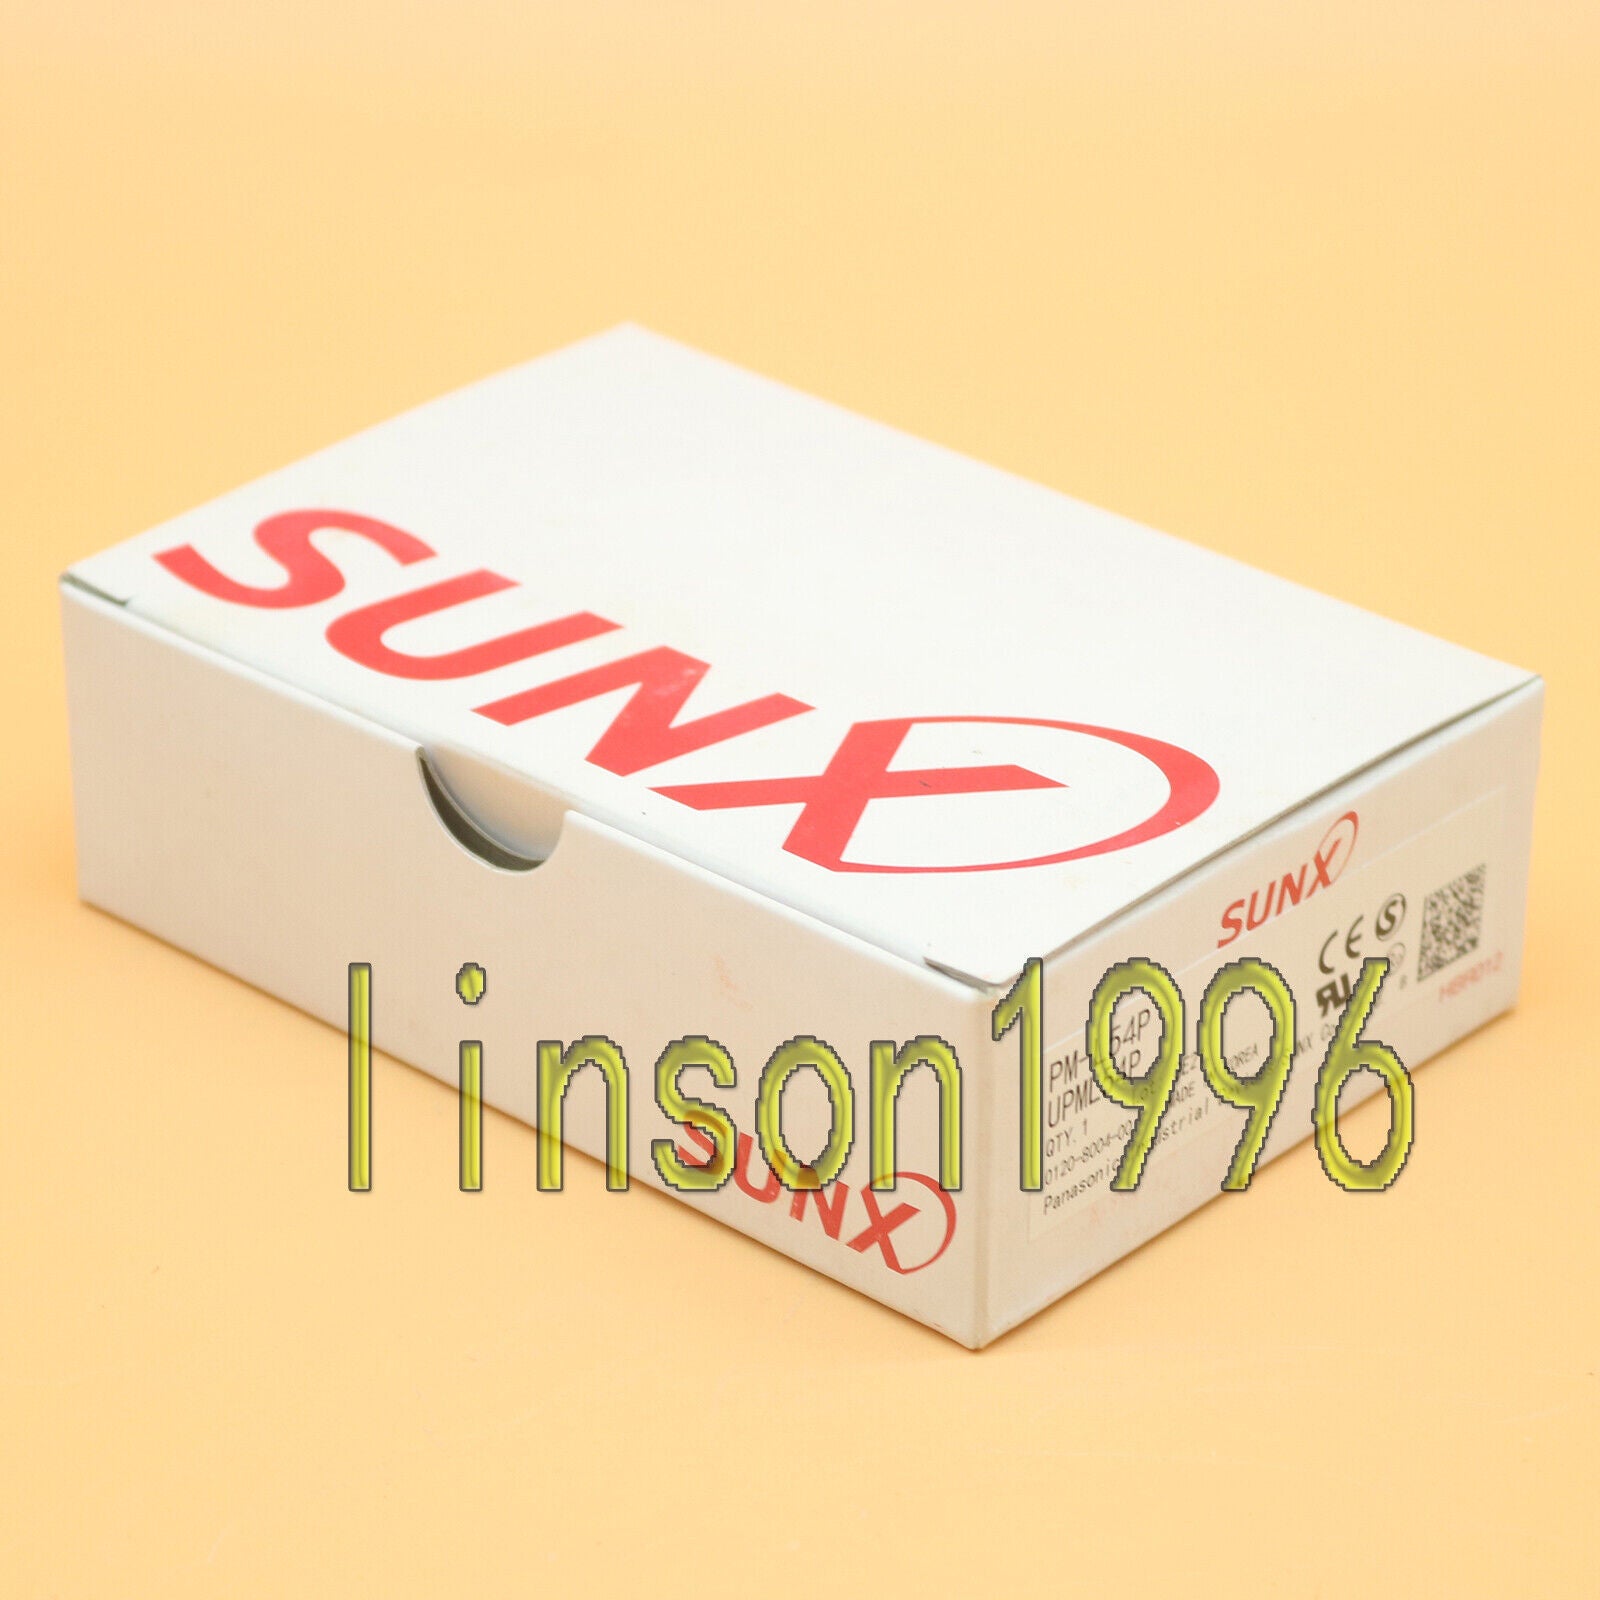 new For Panasonic Sunx PM-L54P Photoelectric Switch Sensor